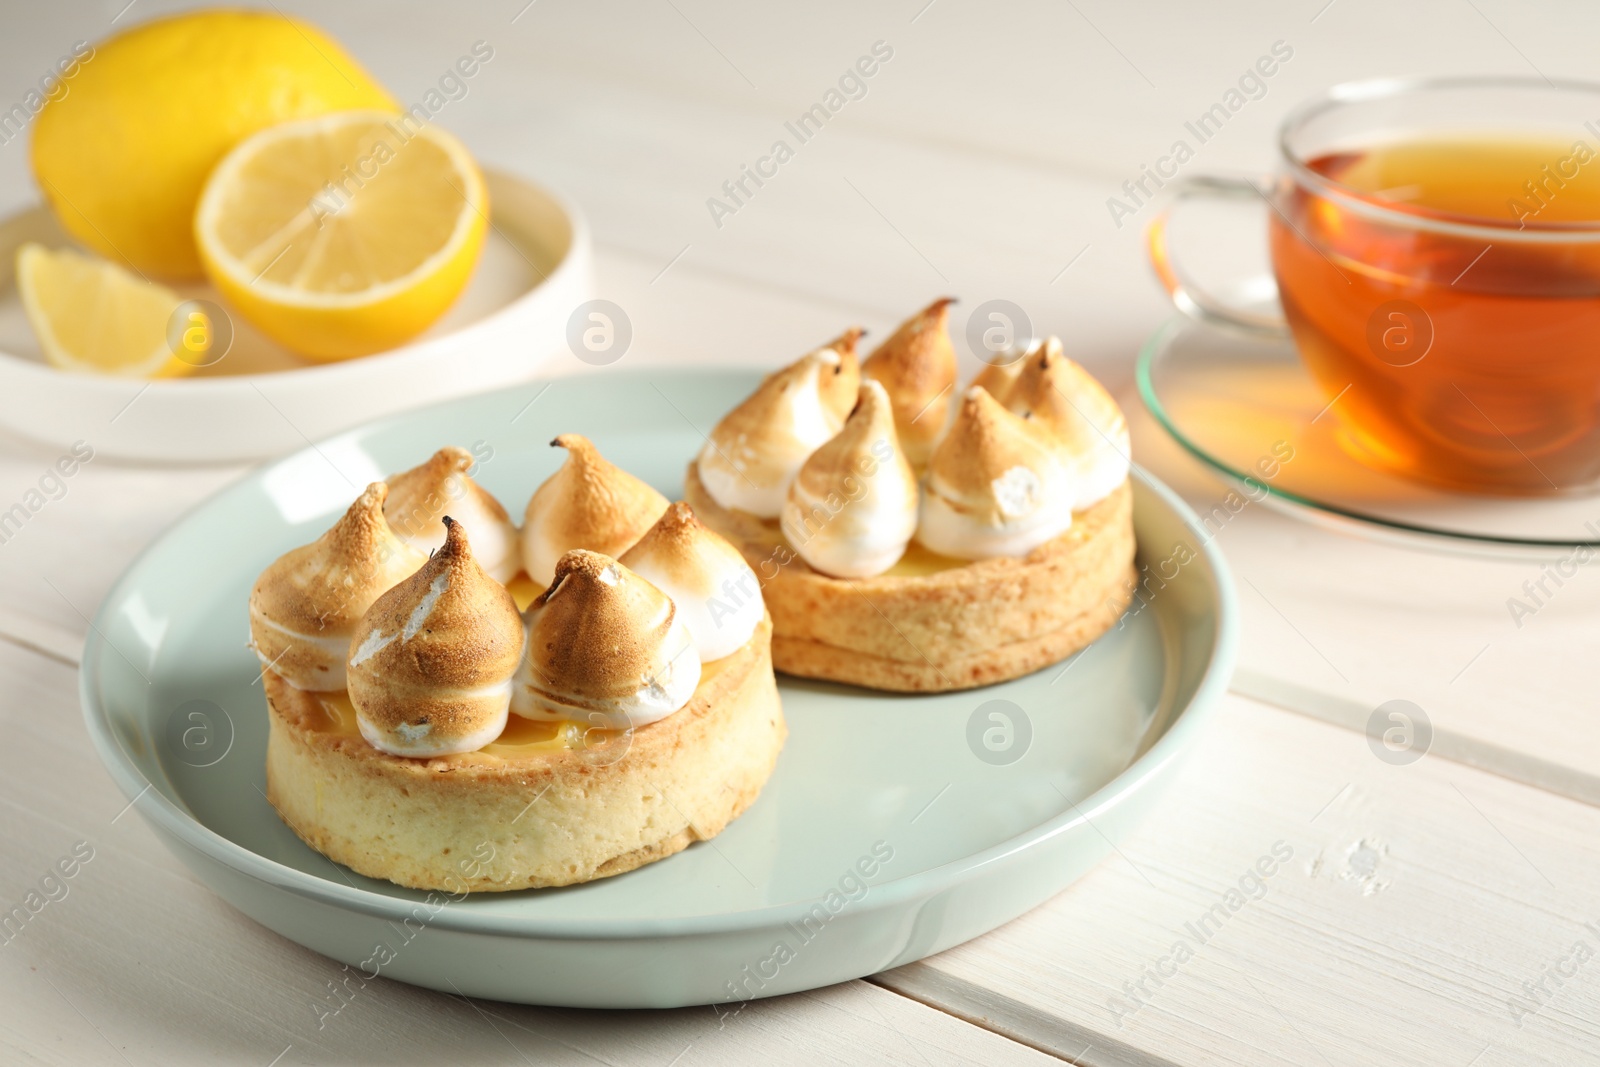 Photo of Delicious lemon meringue pies on white wooden table